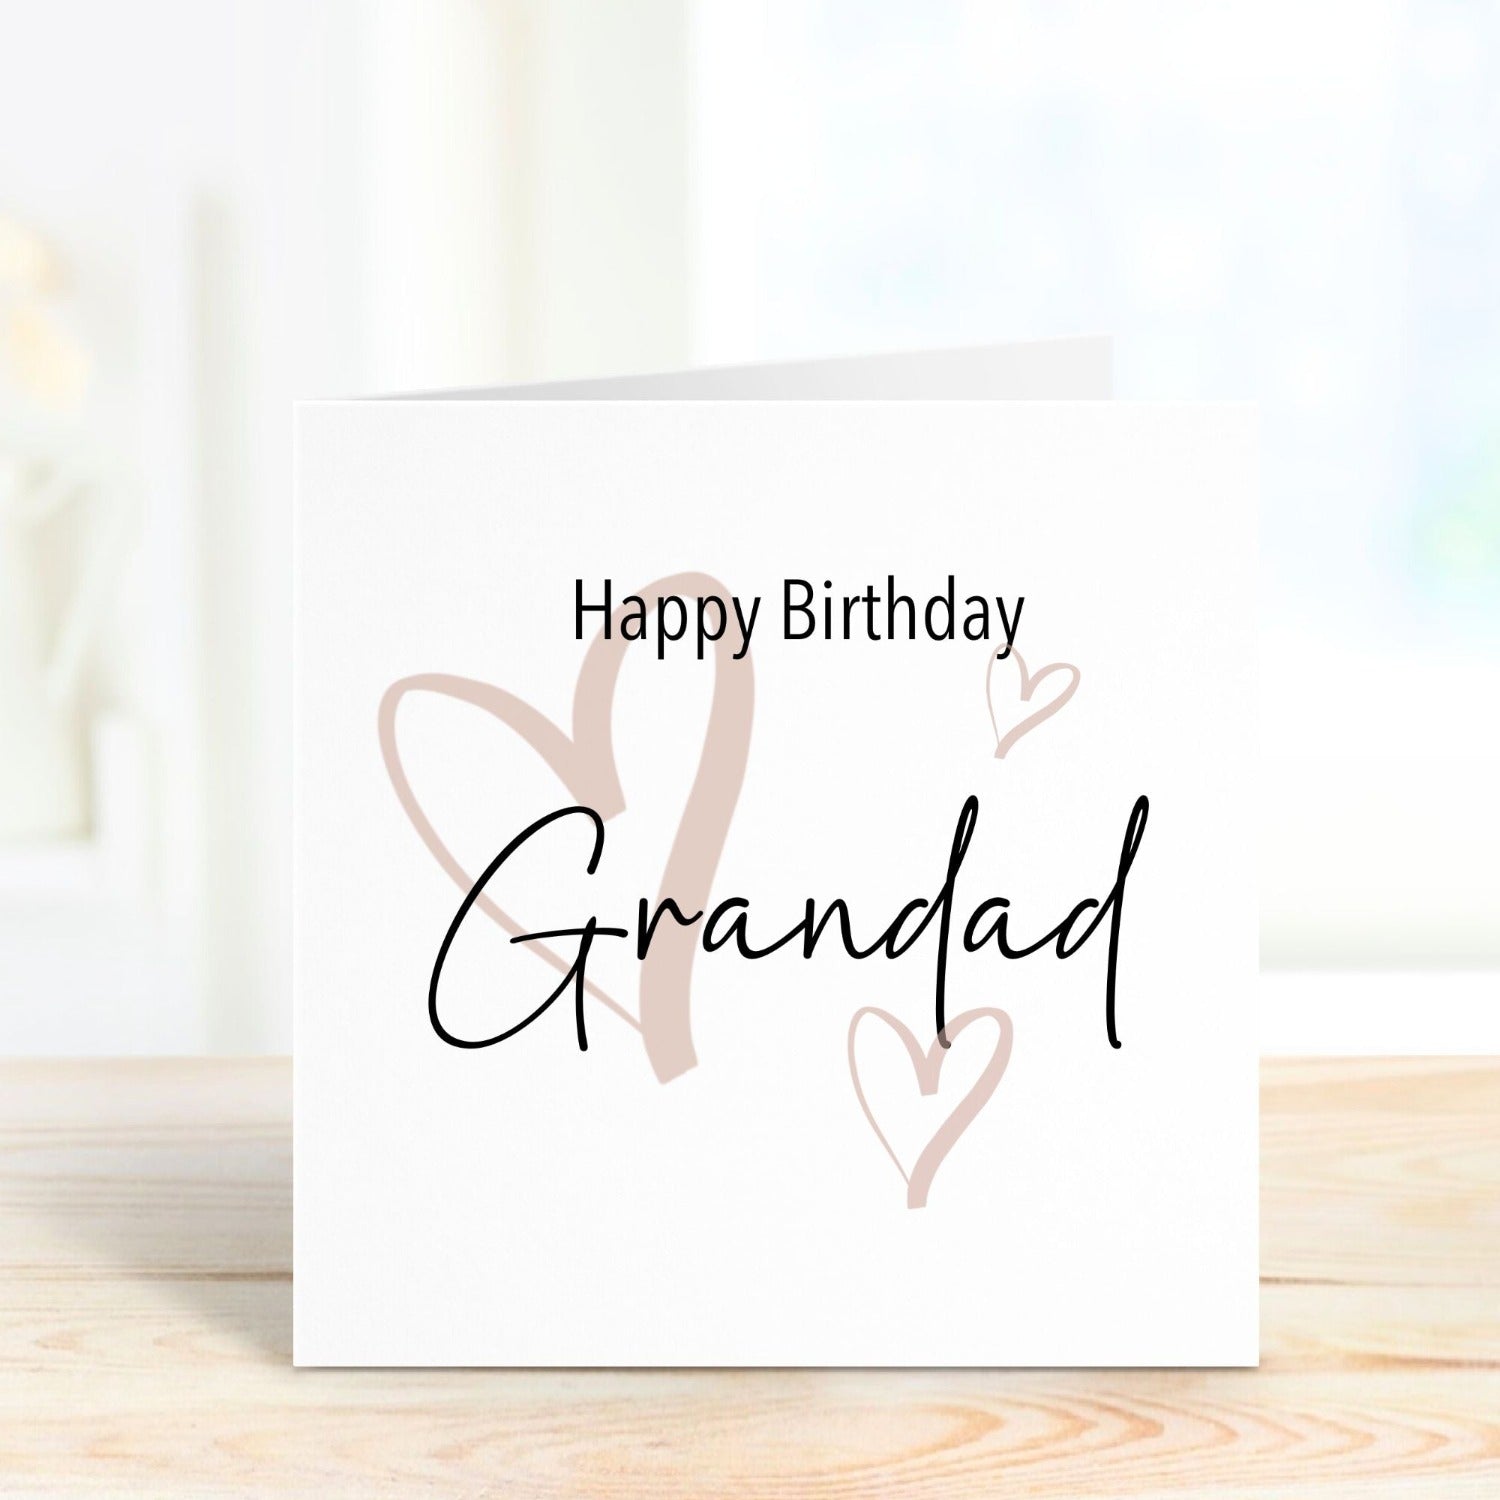 personalised card for grandad birthday